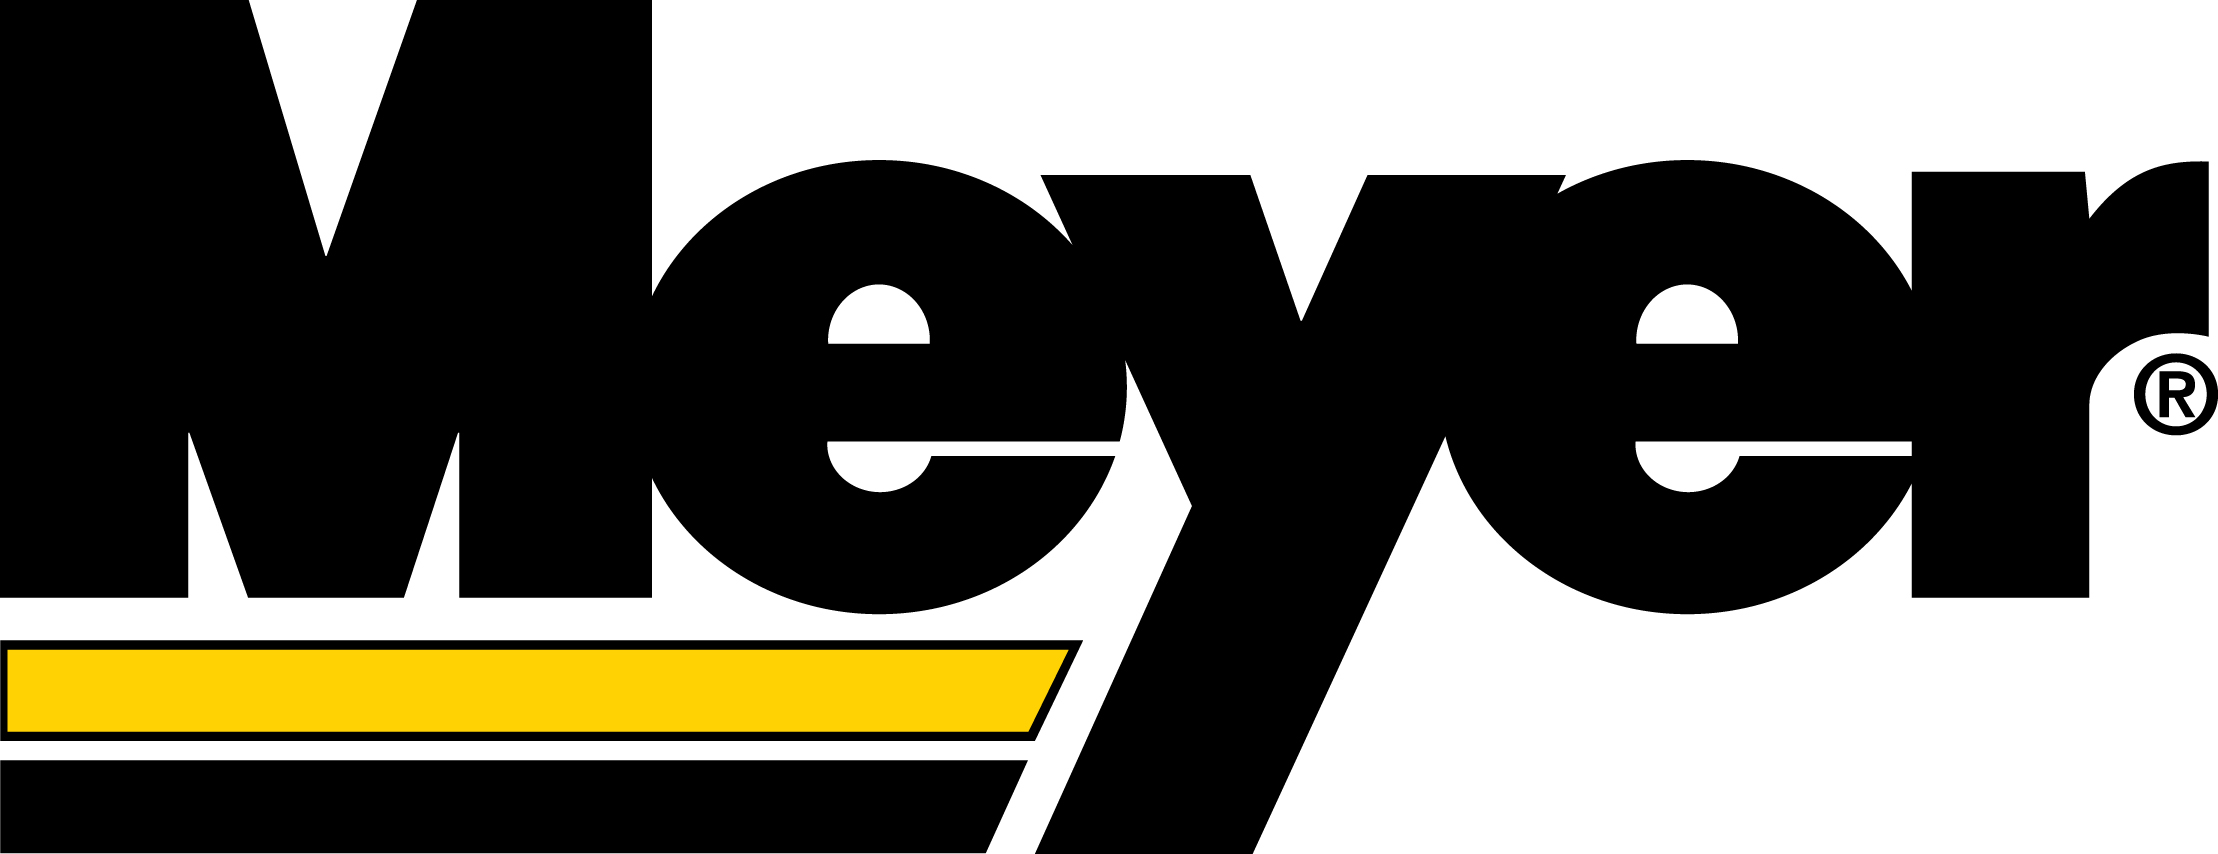 meyer logo 2008